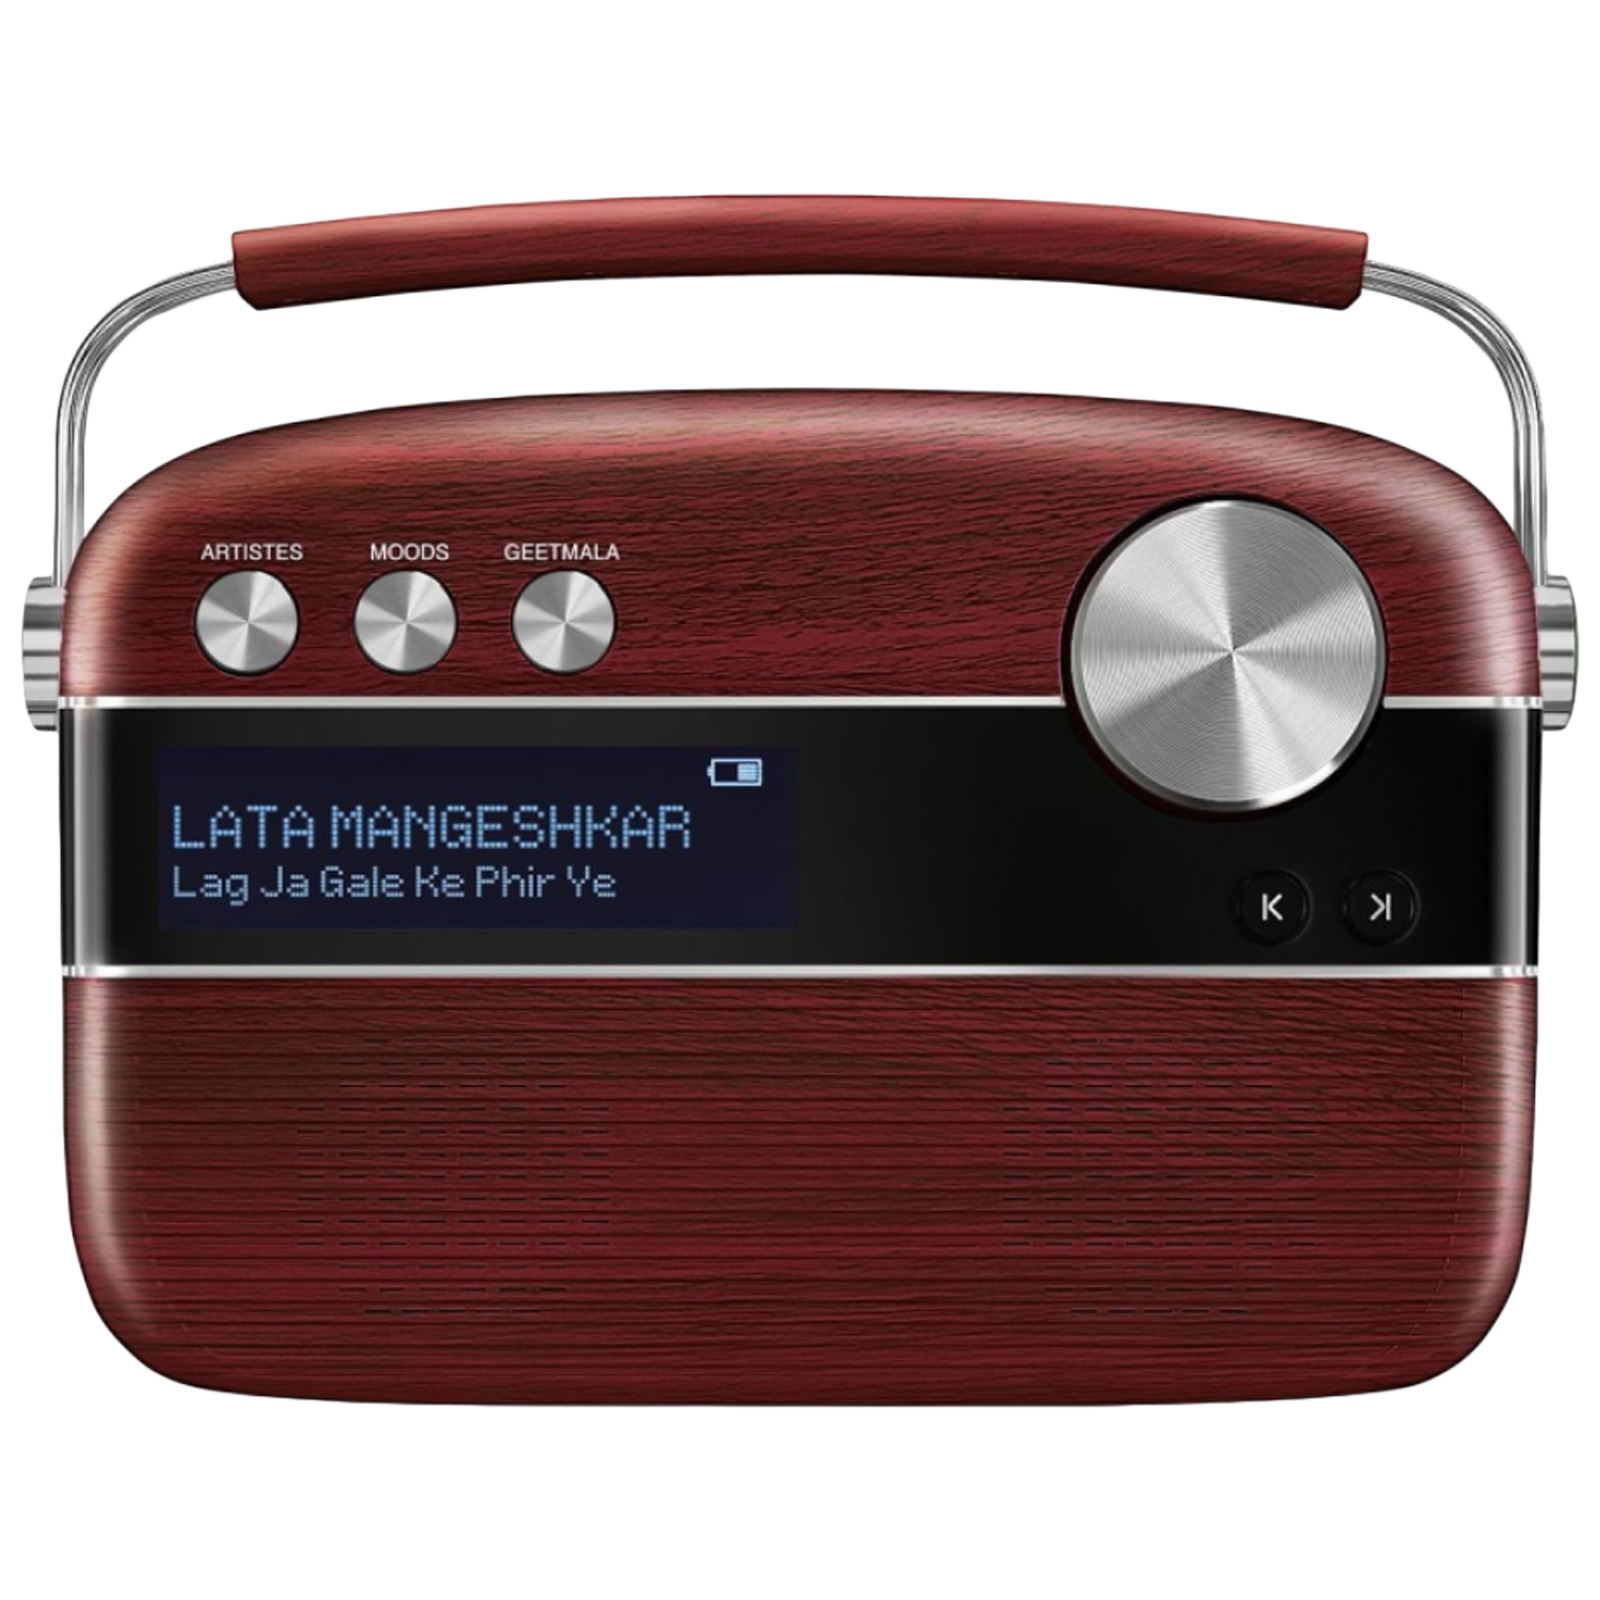 SAREGAMA Carvaan 6 Watts Bengali Music Player (In-Built Stereo Speakers, SC03, Cherrywood Red)